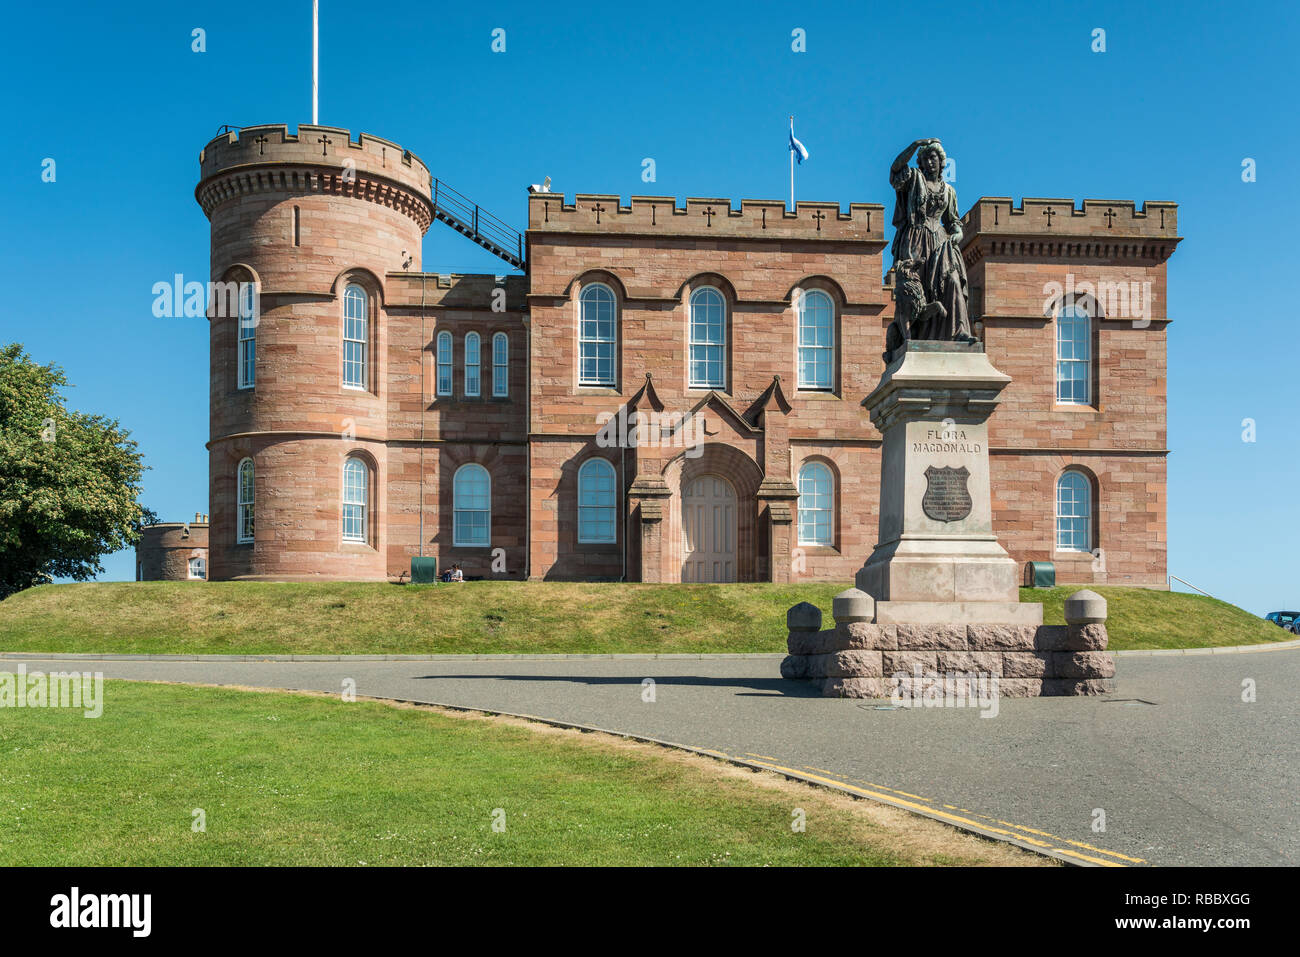 The inverness Castle in Inverness, Scotland, United Kingdom, Europe. Stock Photo